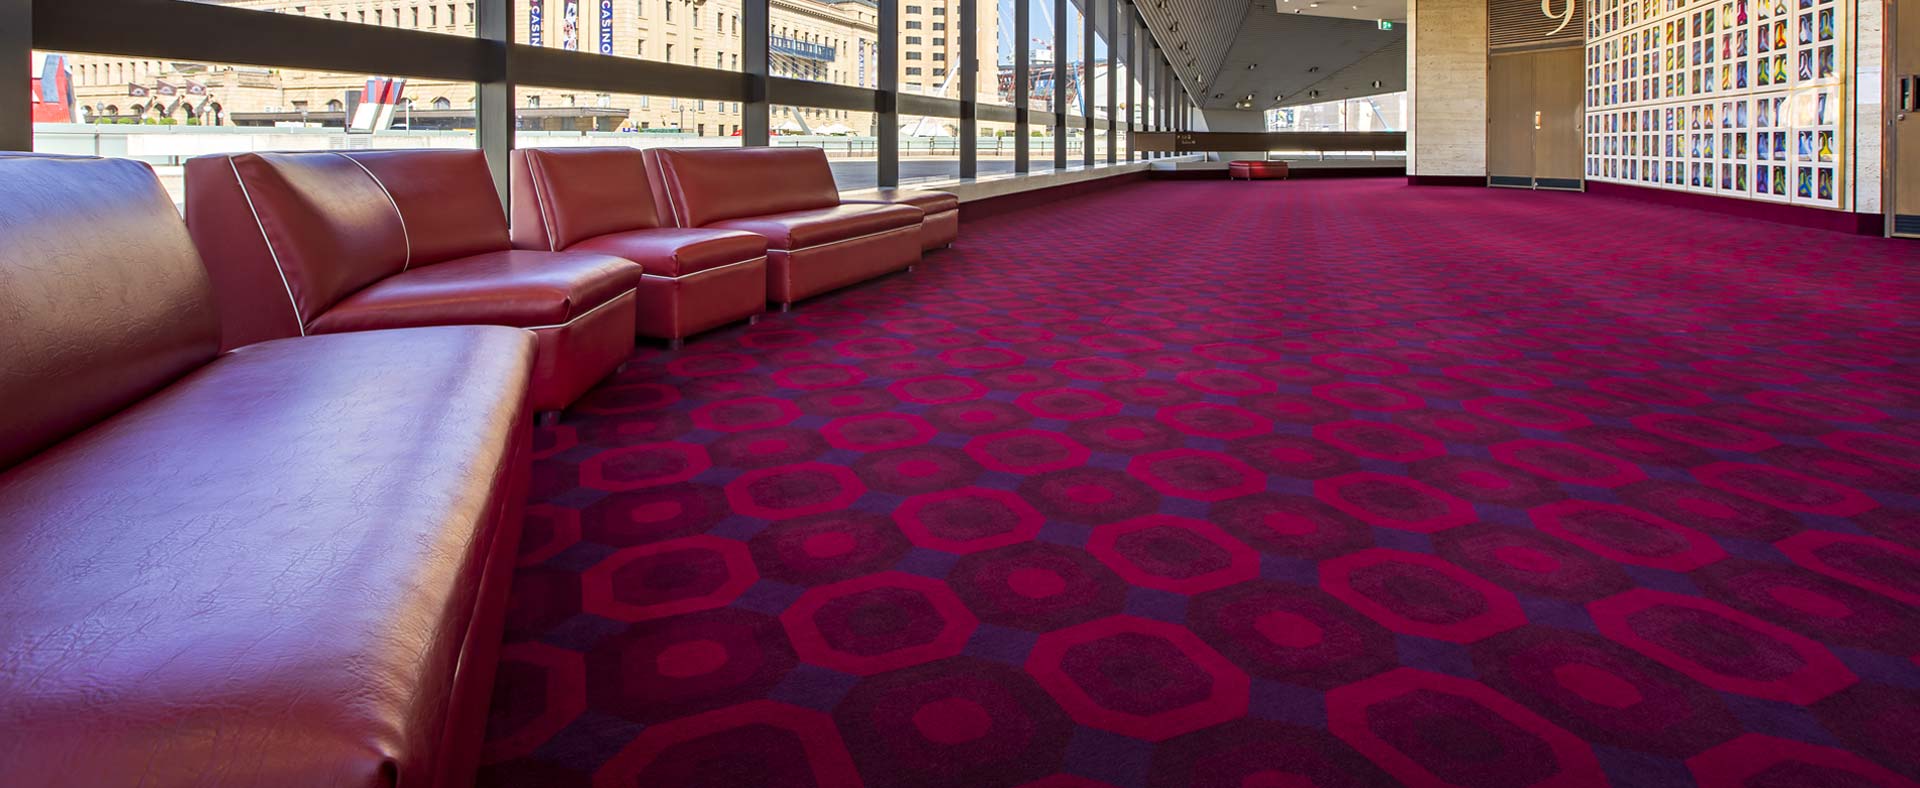 commercial carpets commercial carpet tiles and broadloom | feltex carpets australia JFQRONM